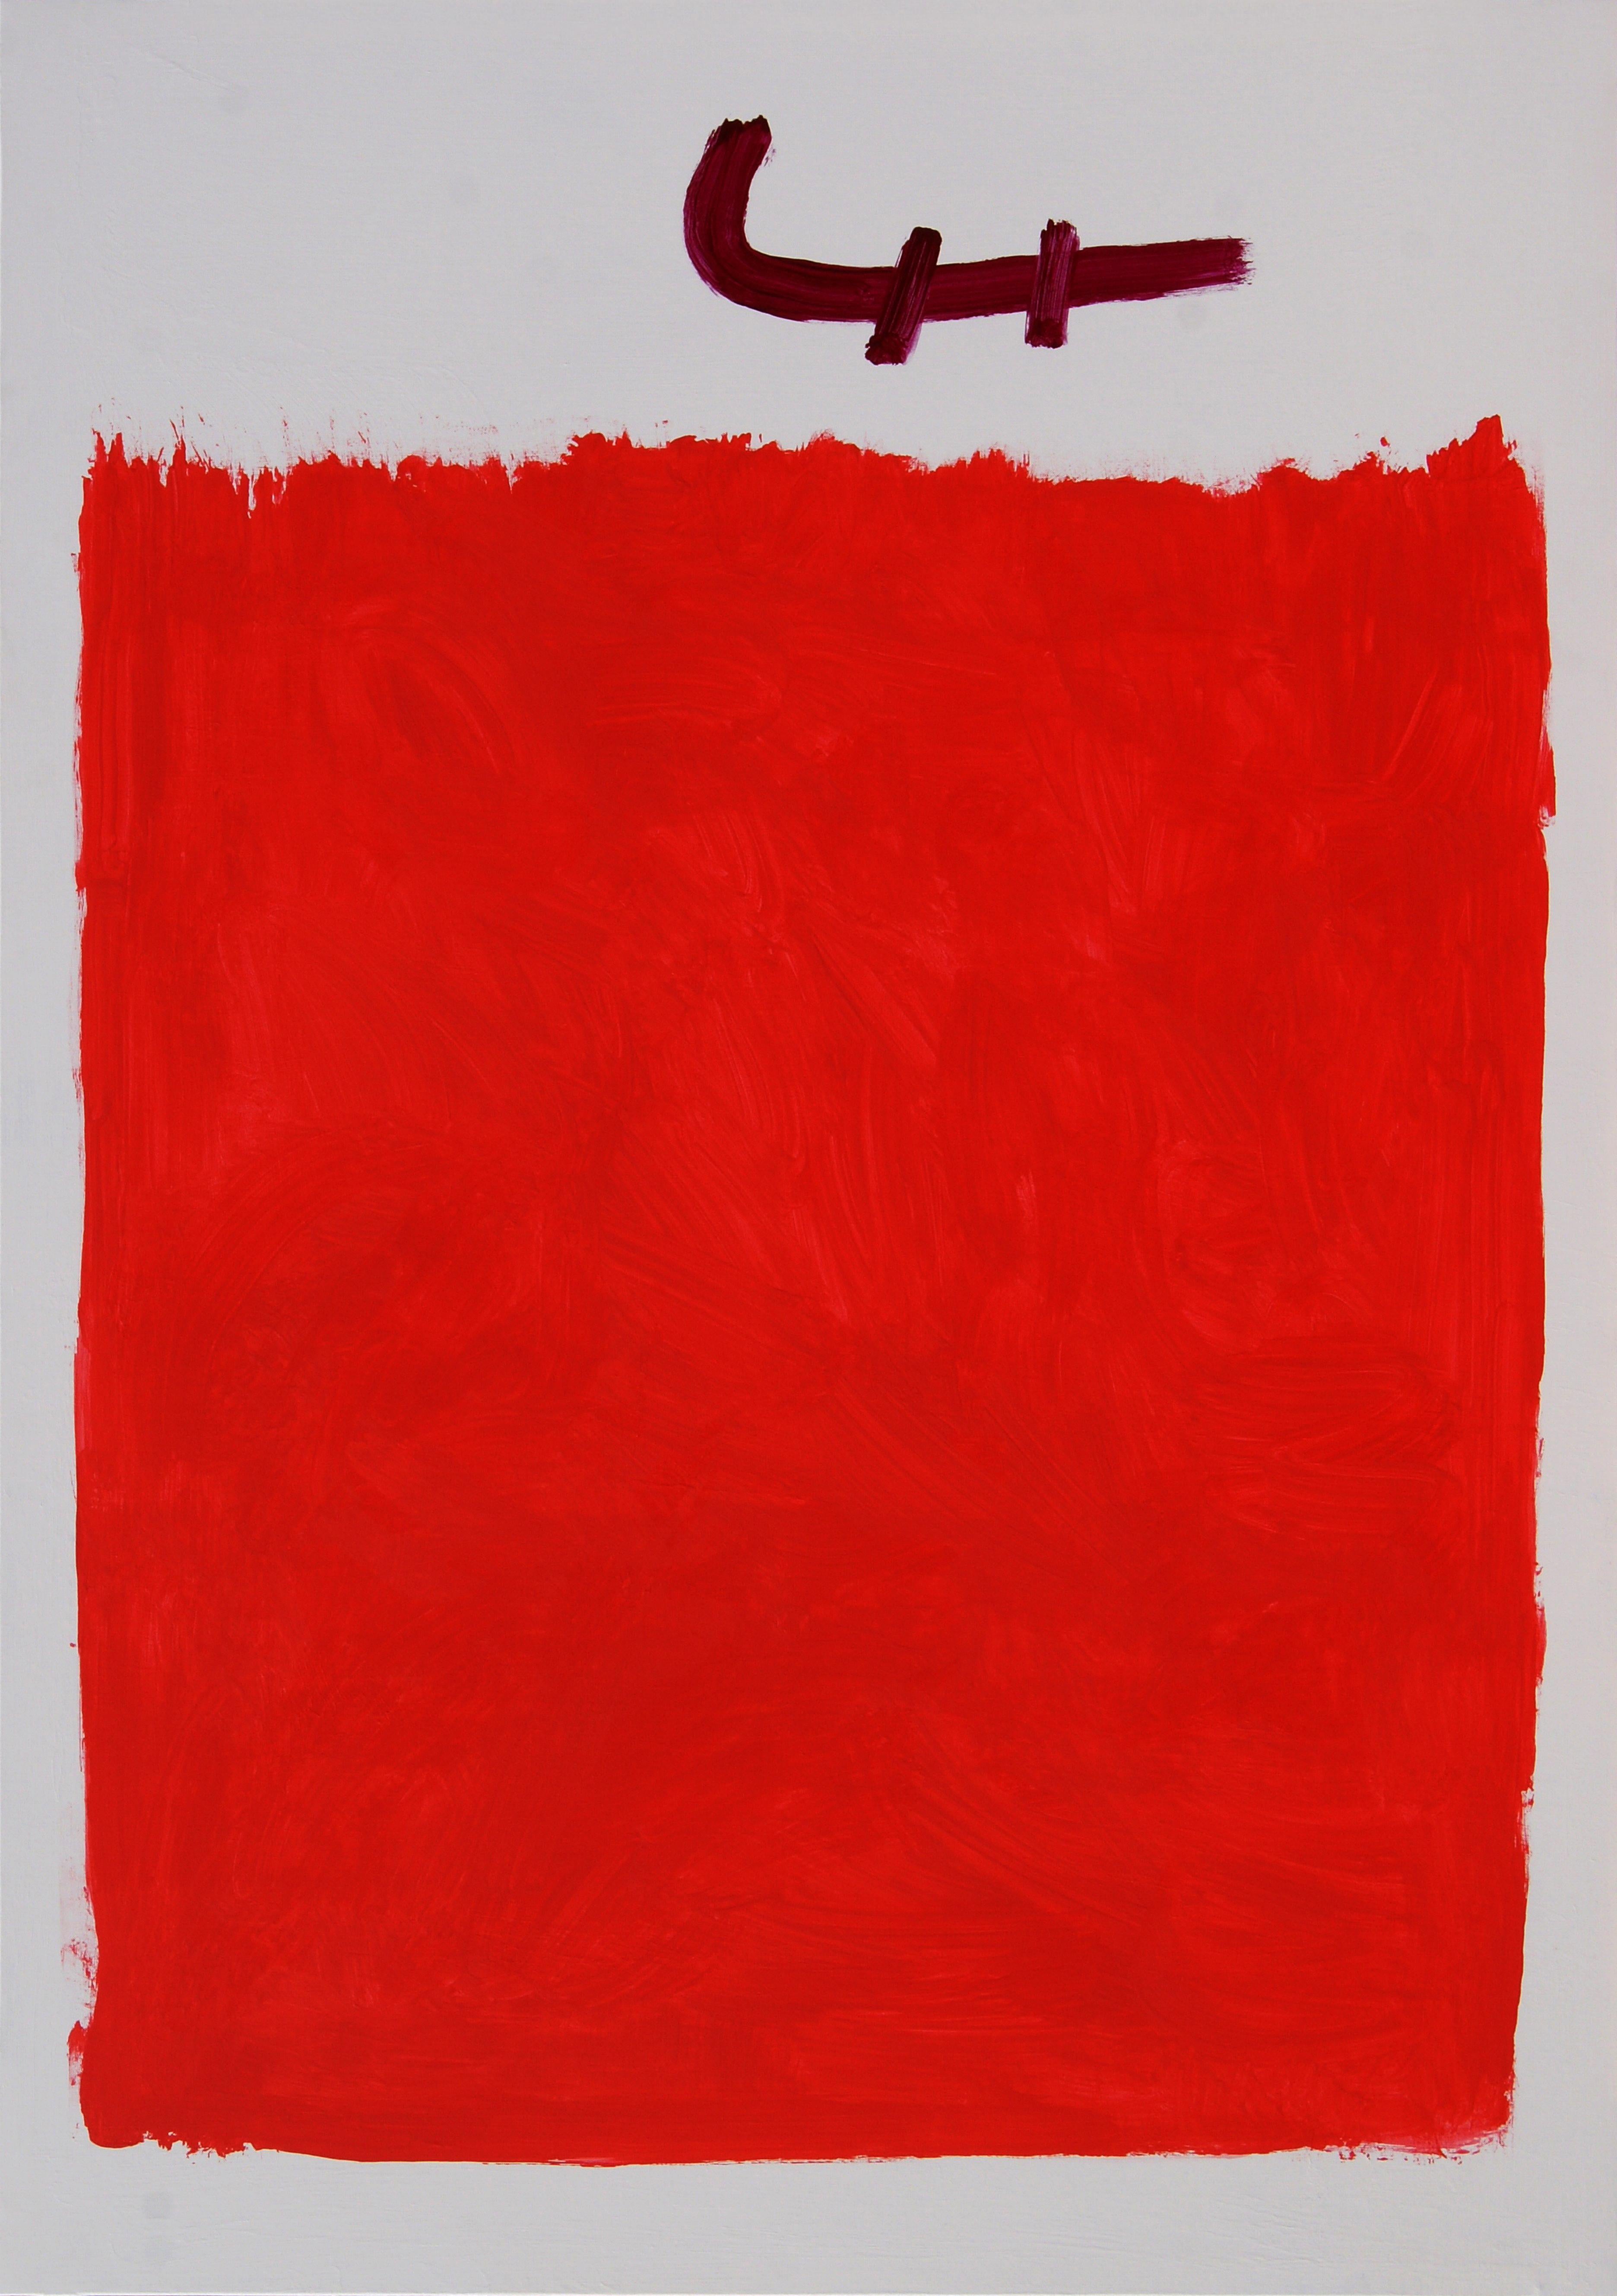 RAFAEL RUZ Abstract Painting - Ruz . Red  Vertical Sin conciencia    abstract canvas acrylic painting